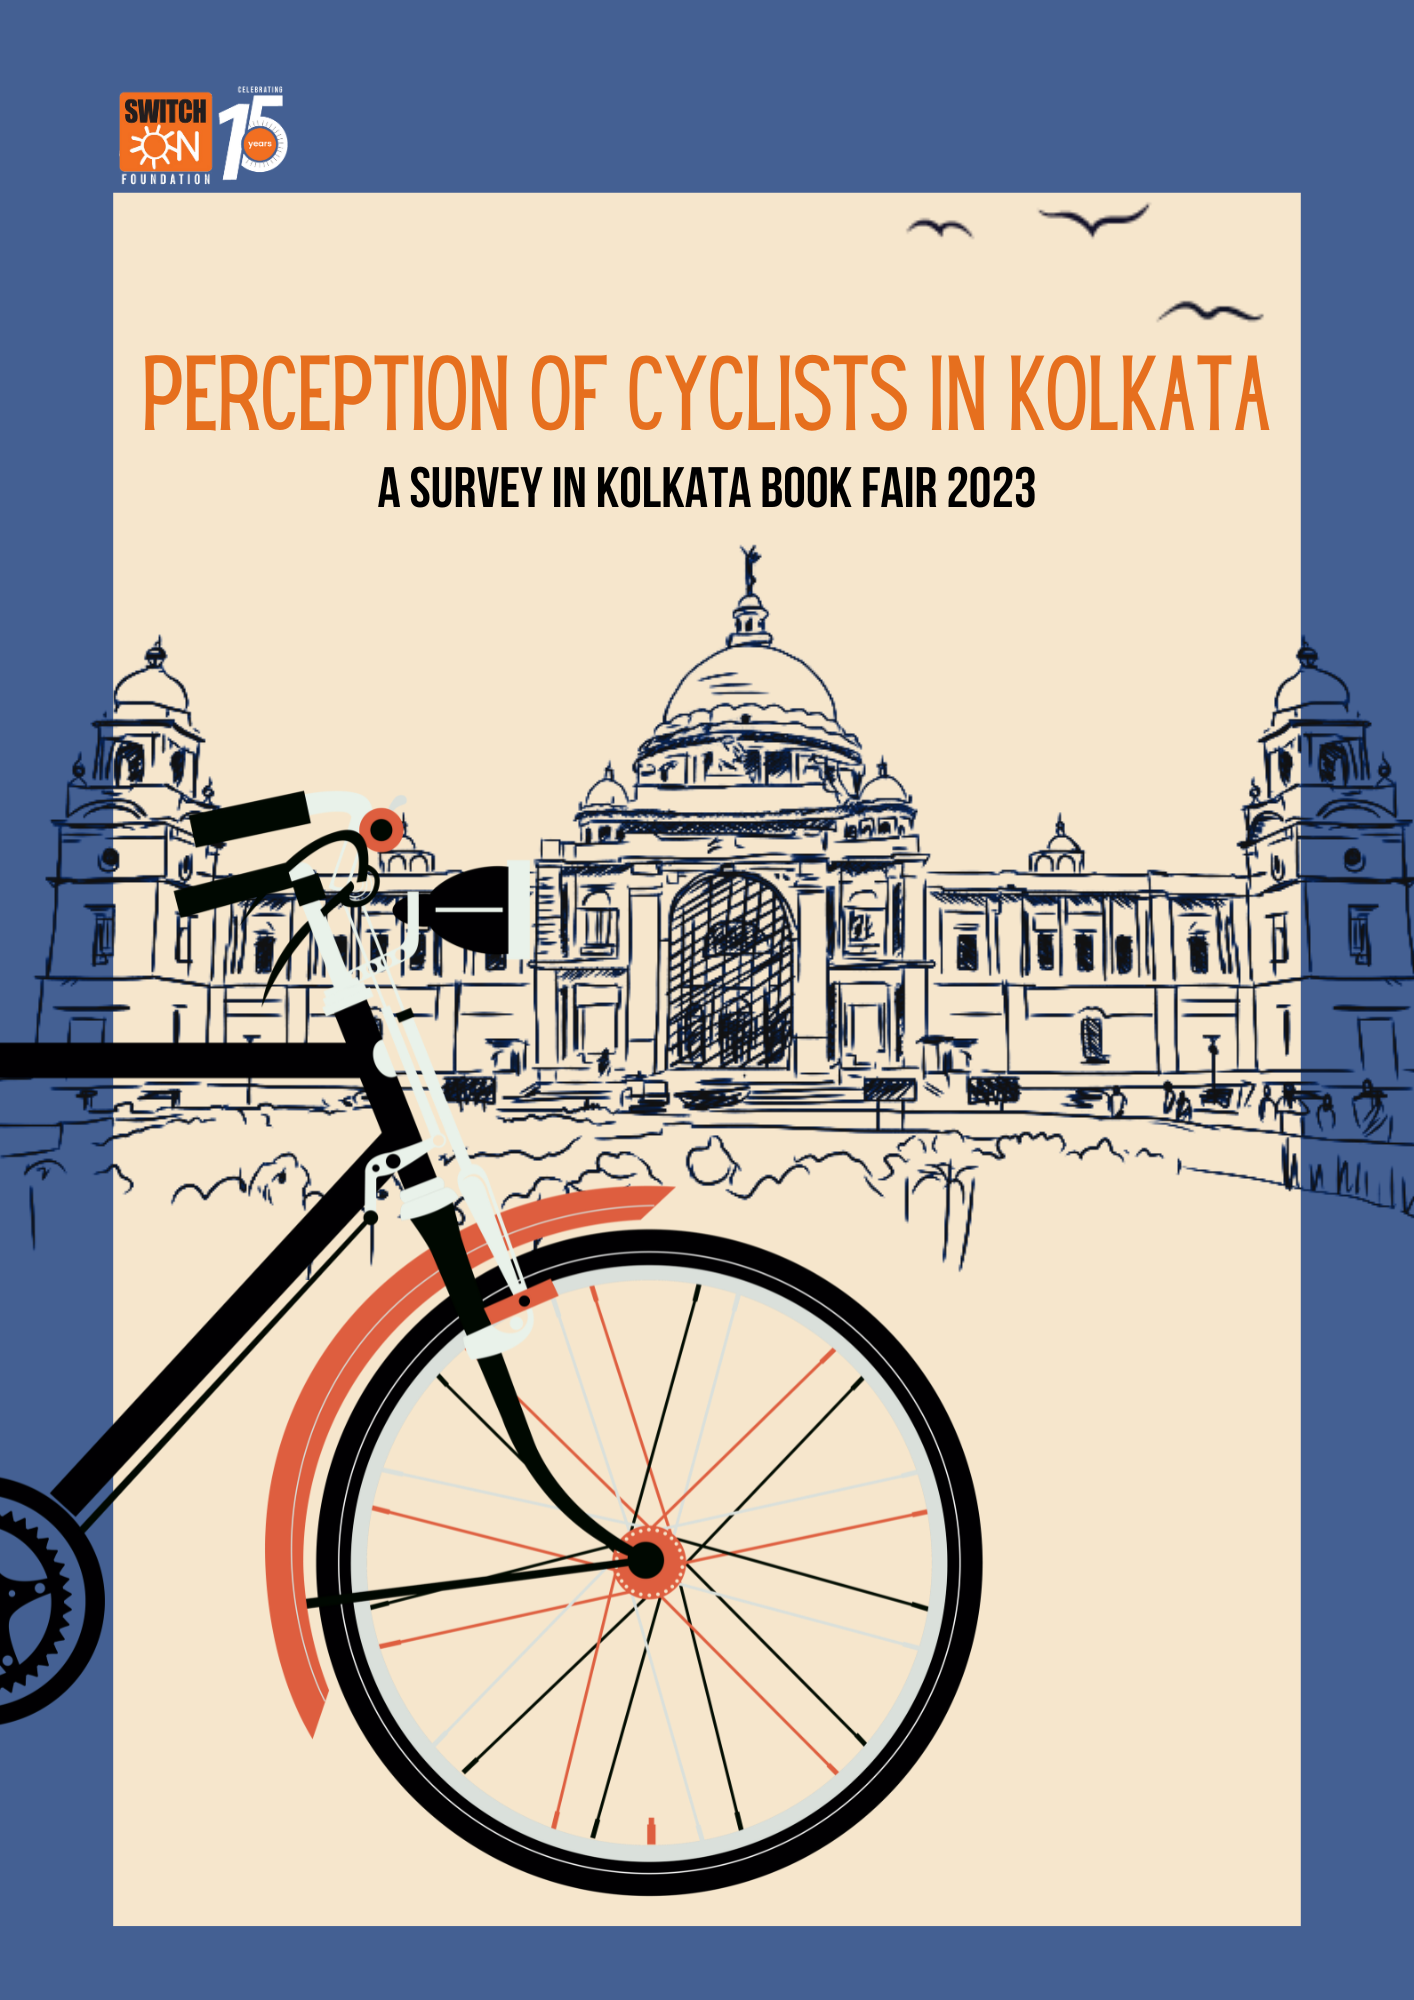 Perception Study of Cyclists in Kolkata